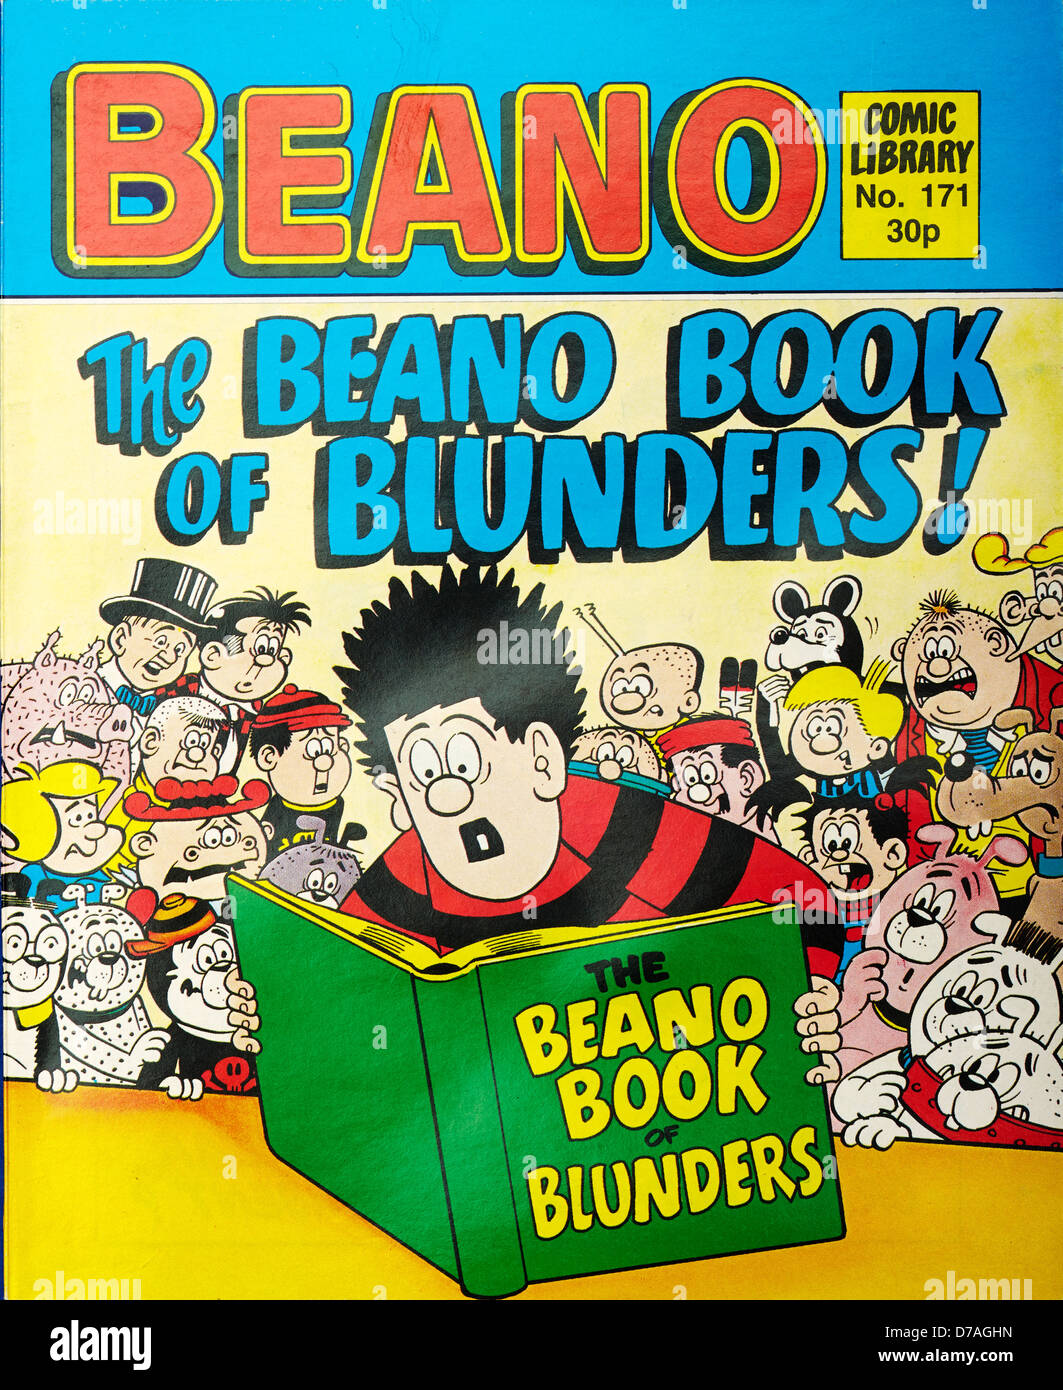 The Beano Comic magazine (Comic Library) Stock Photo